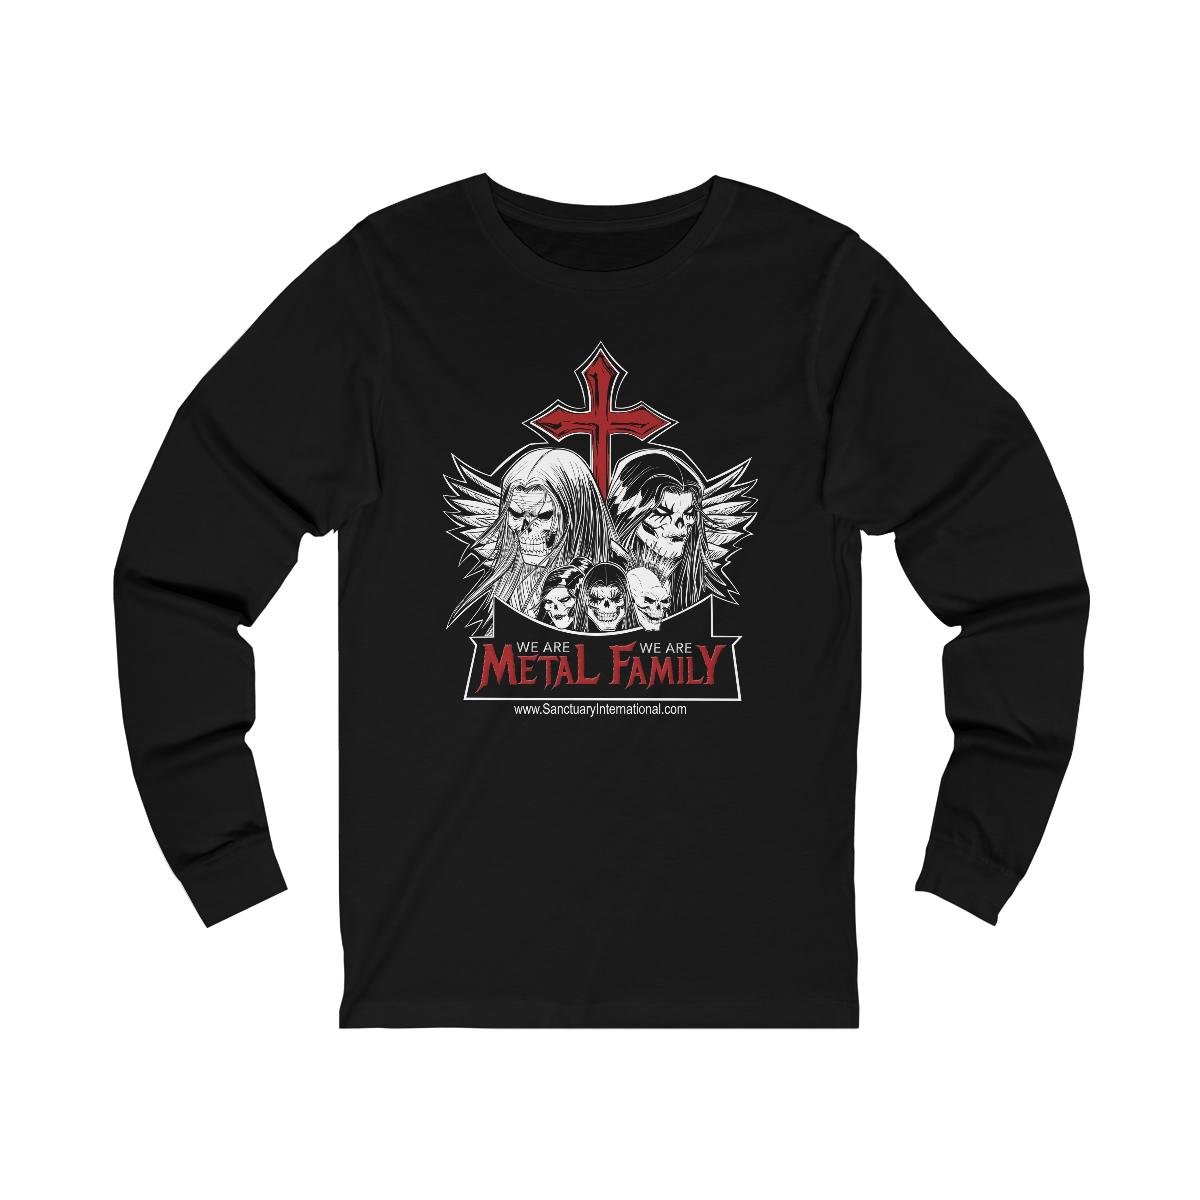 Sanctuary International – Metal Family Long Sleeve Tshirt